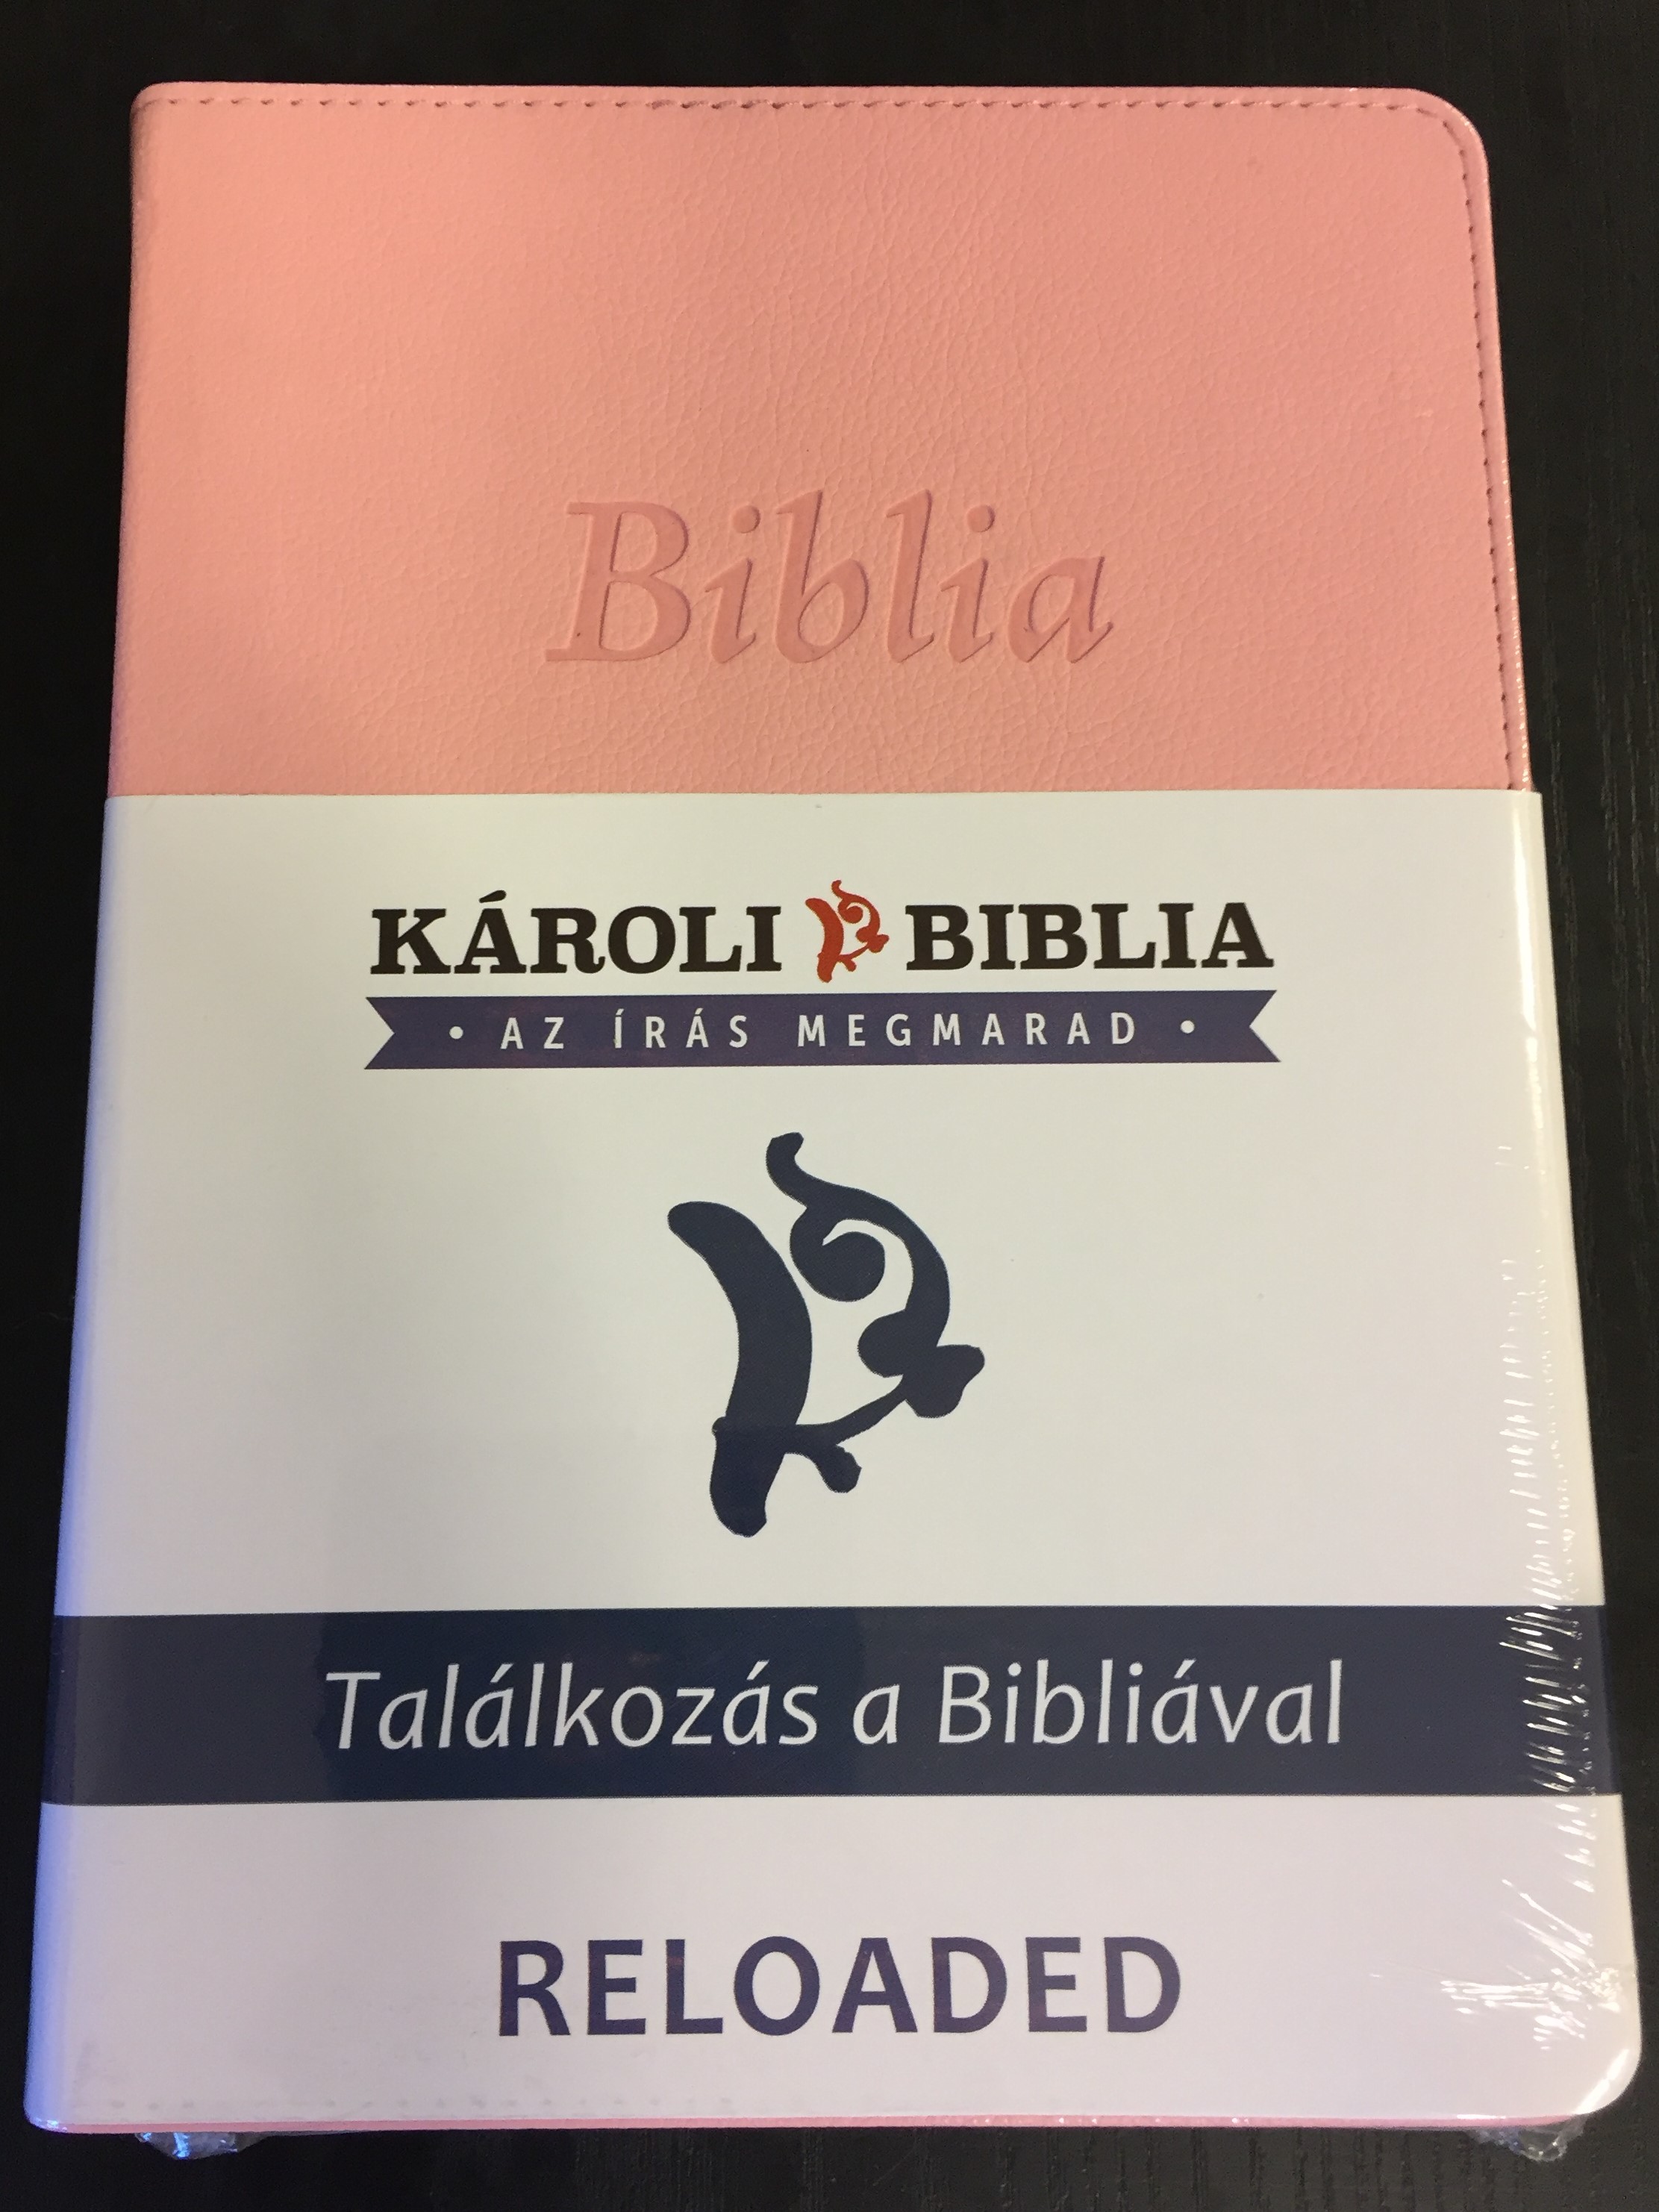 copy-of-hungarian-karoli-reloaded-bible-pu-imitation-leather-cover-pink-magyar-biblia-revide-lt-k-roli-k-z-pm-ret-r-zsasz-n-m-b-r-words-of-god-and-words-of-jesus-in-red-1-.jpg